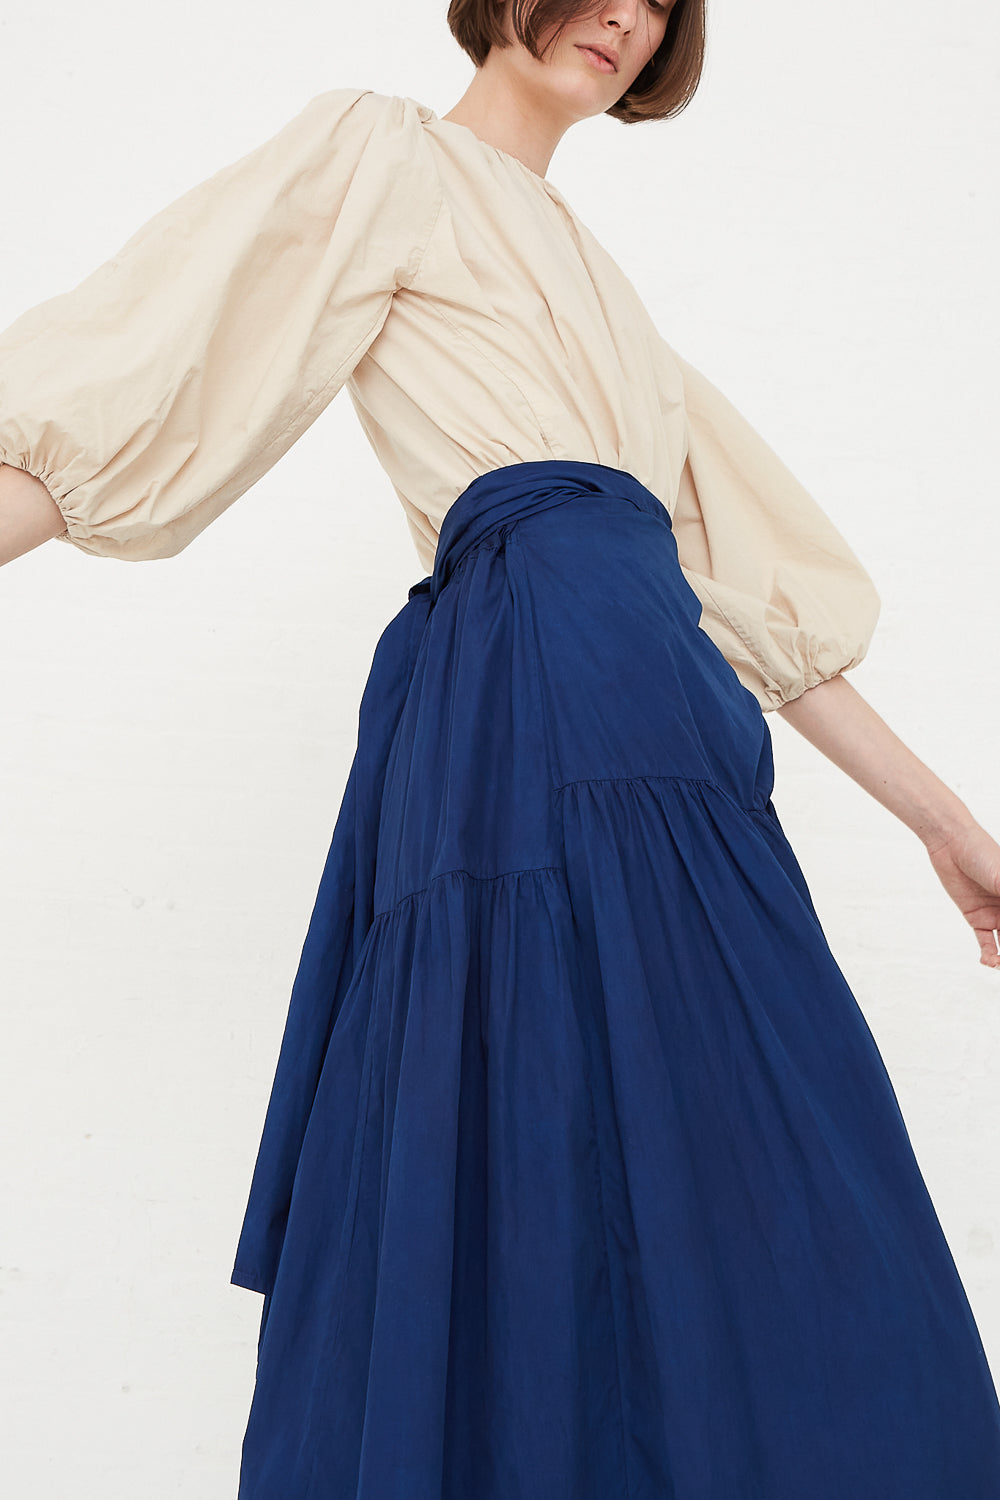 Cosmic Wonder - Suvin Cotton Broadcloth Wrapped Gather Skirt in Ryukyu Indigo side waist detail